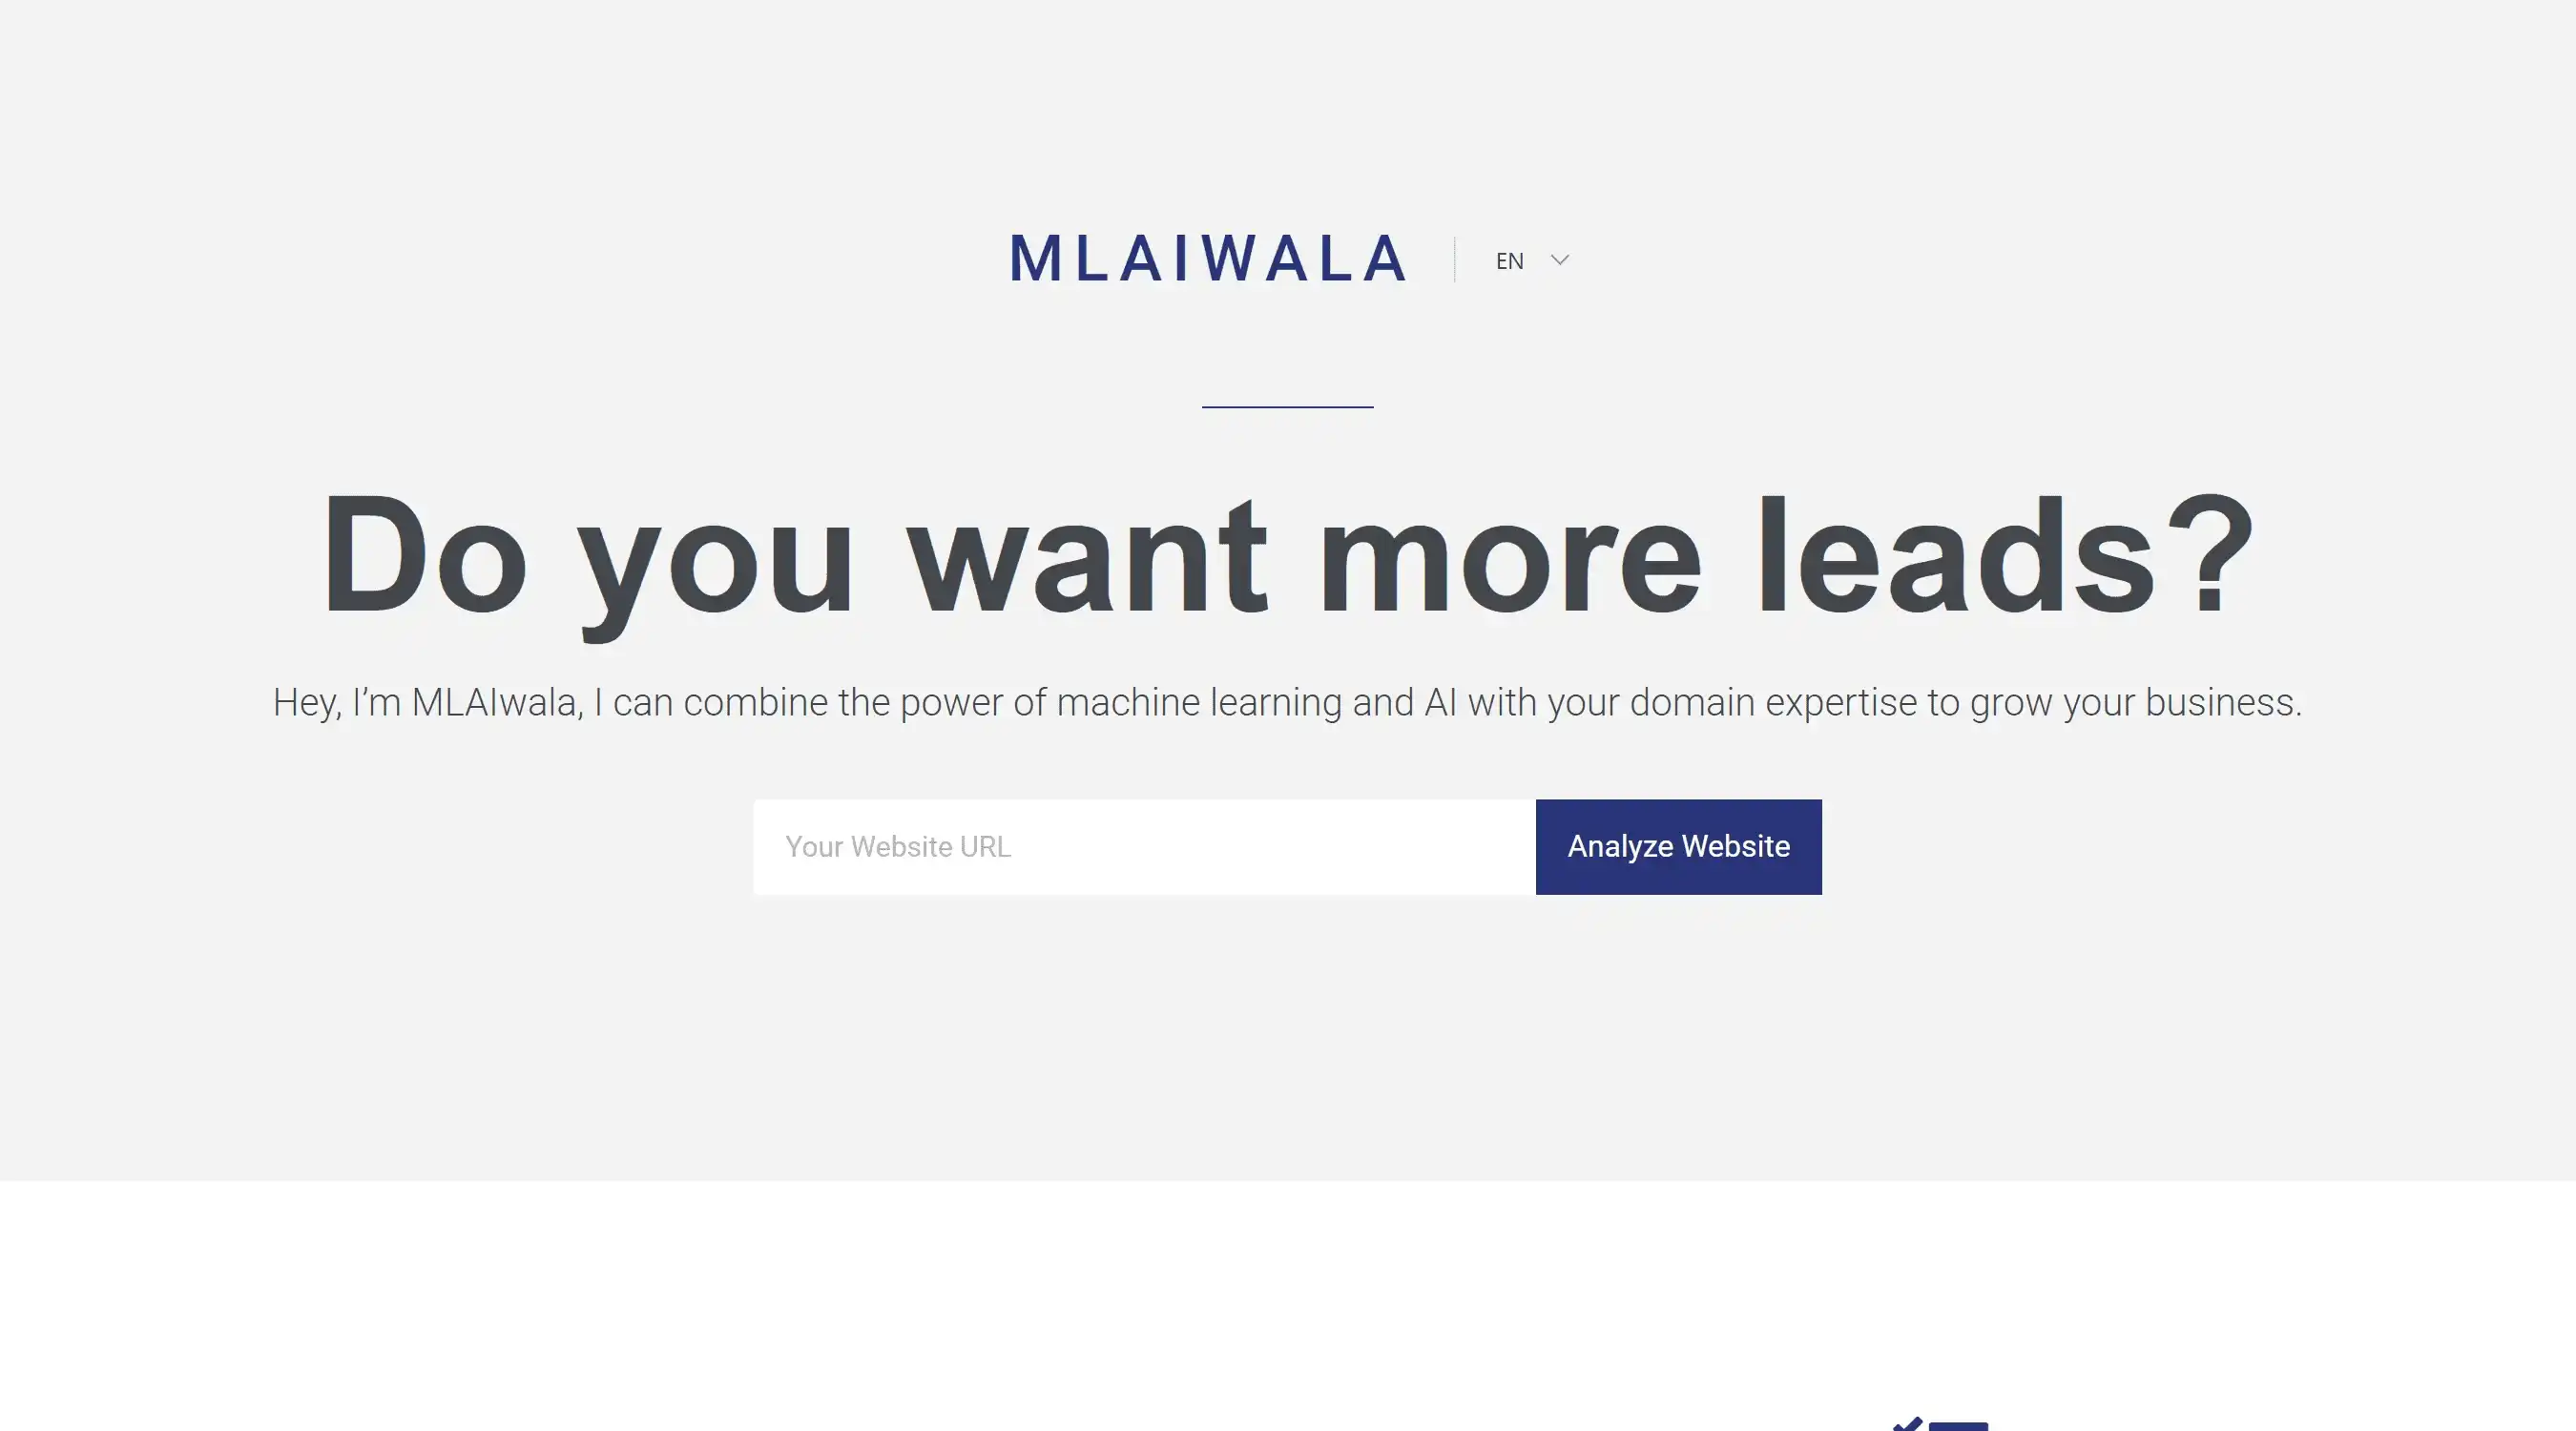 MLAIWALA - Do you want more leads?